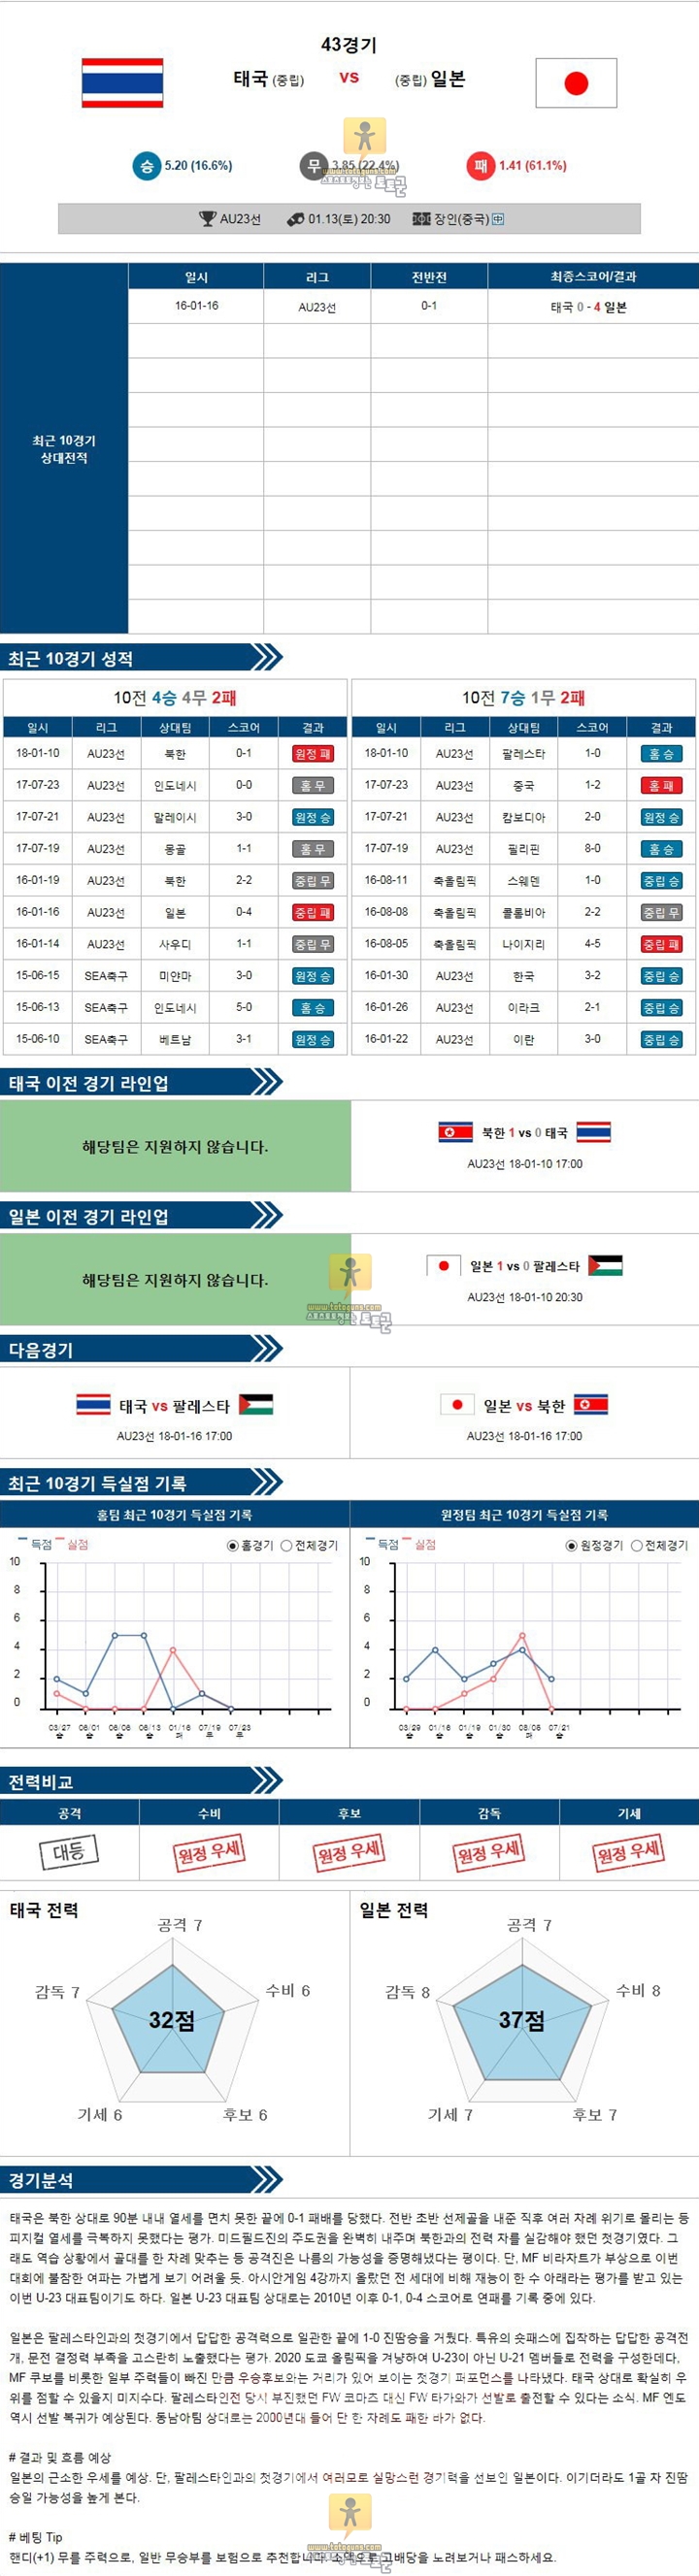 [U23챔피언십] 1월 13일 20:30 축구분석 태국 vs 일본